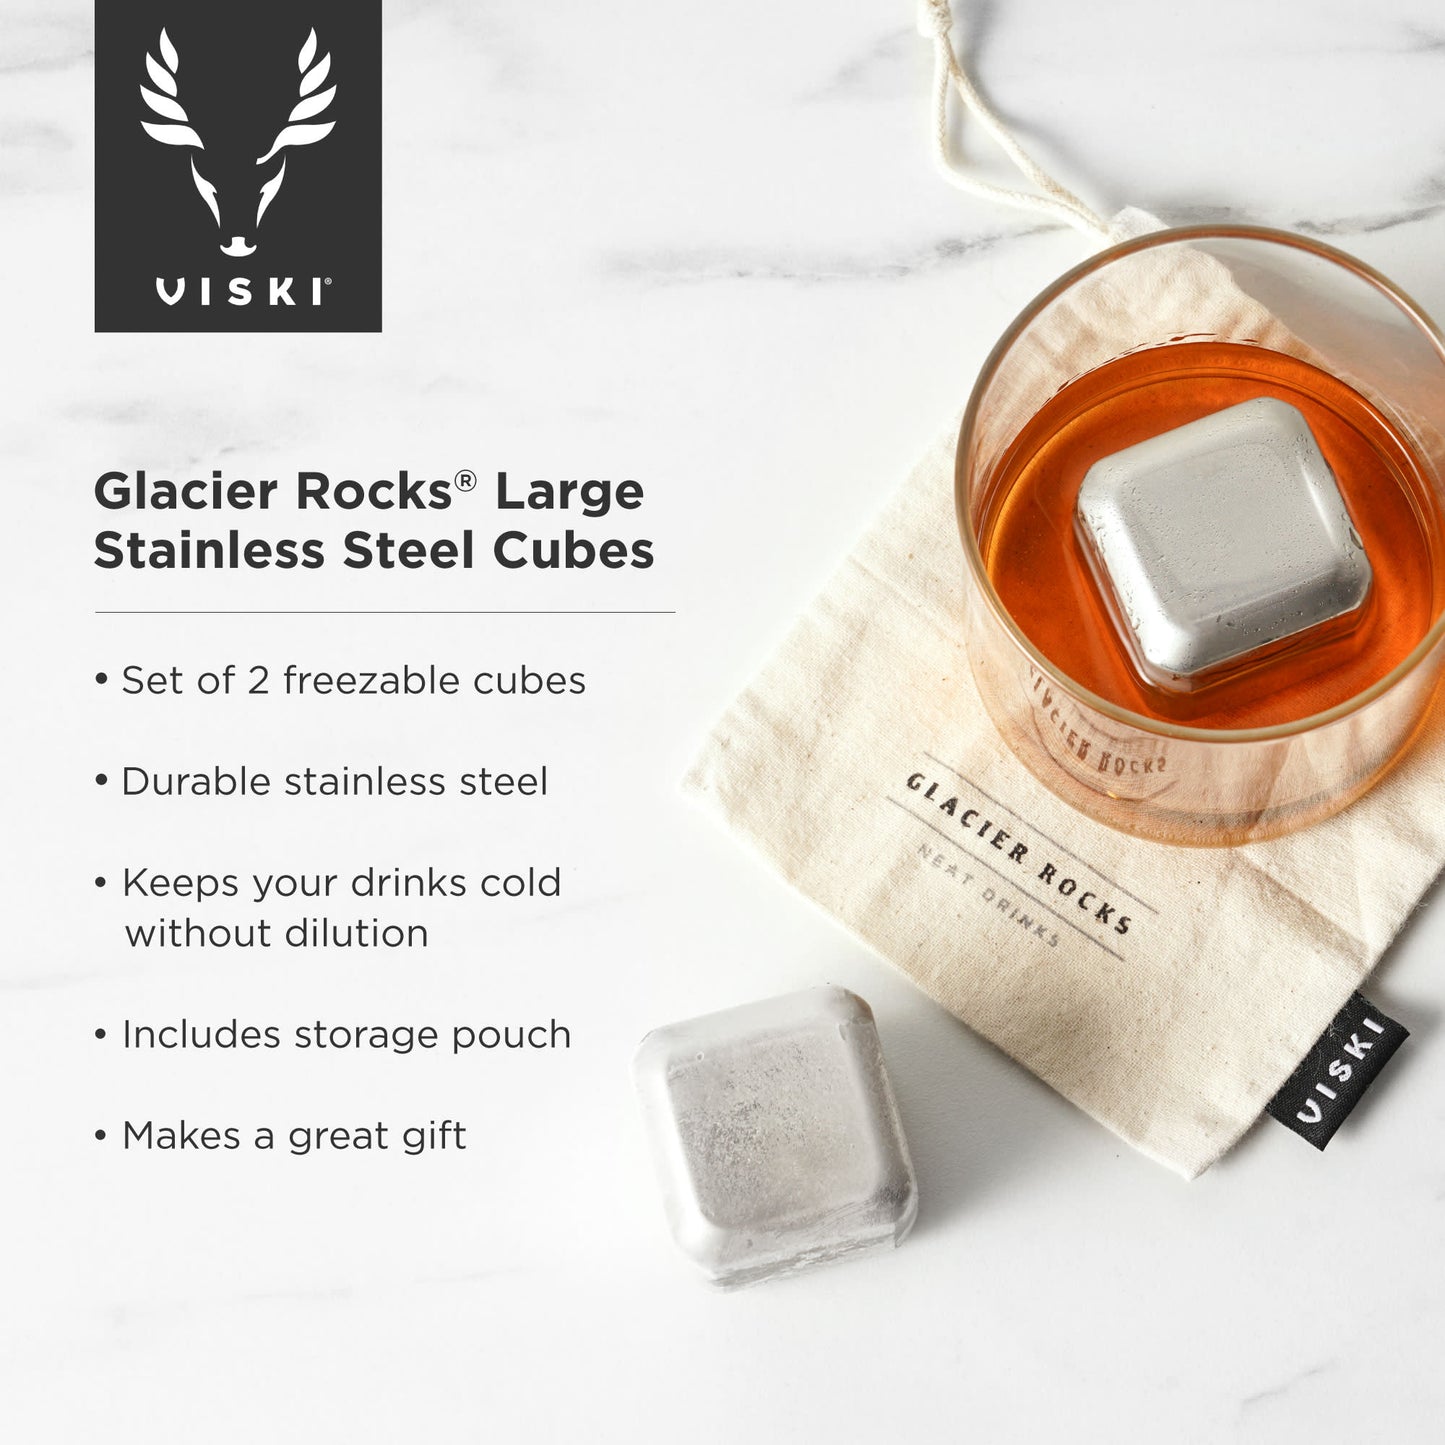 Glacier Rocks® Large Stainless Steel Cubes